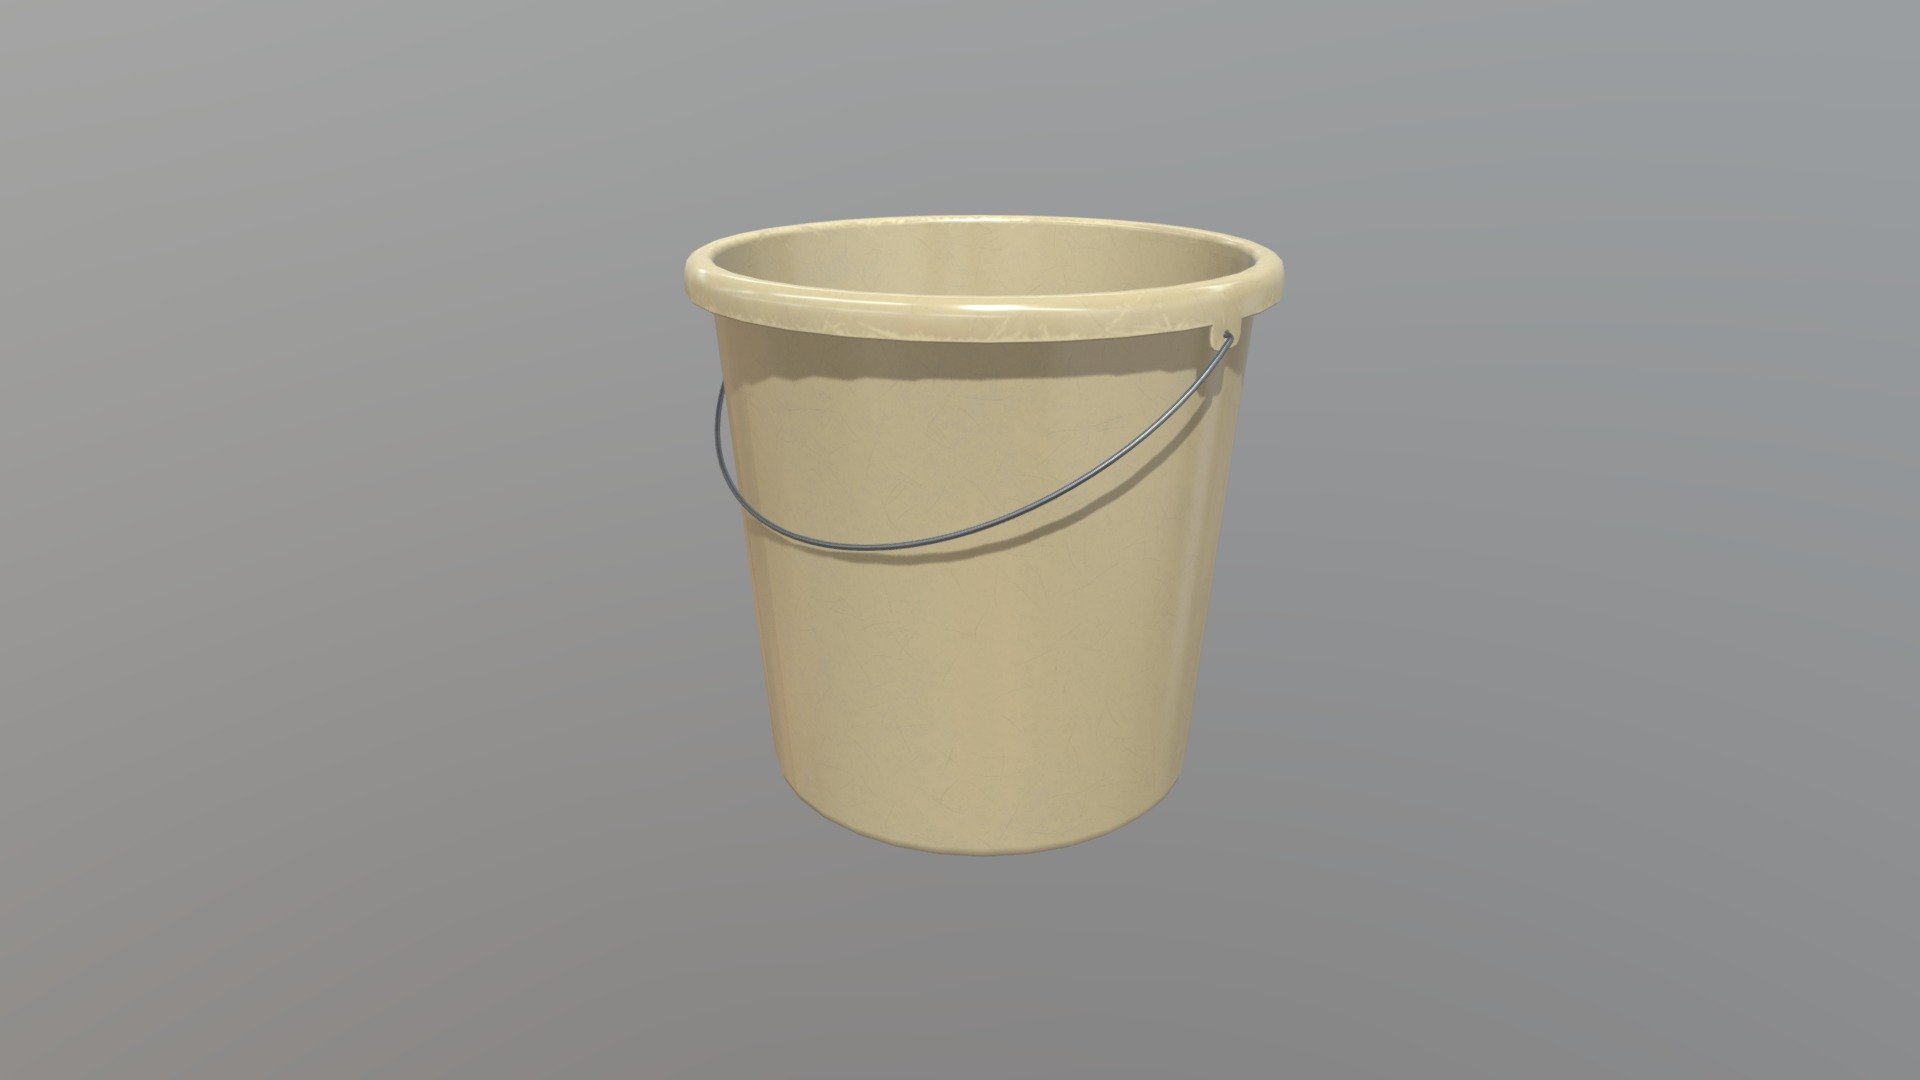 Freebie - Game Art: Plastic Bucket, Low Poly, PBR Maps

3ds Max, Substance Painter, Photoshop

Cheers! - Freebie - Game Art: Plastic Bucket - Download Free 3D model by Alex Filip (@filip.alecsandru) 3d model